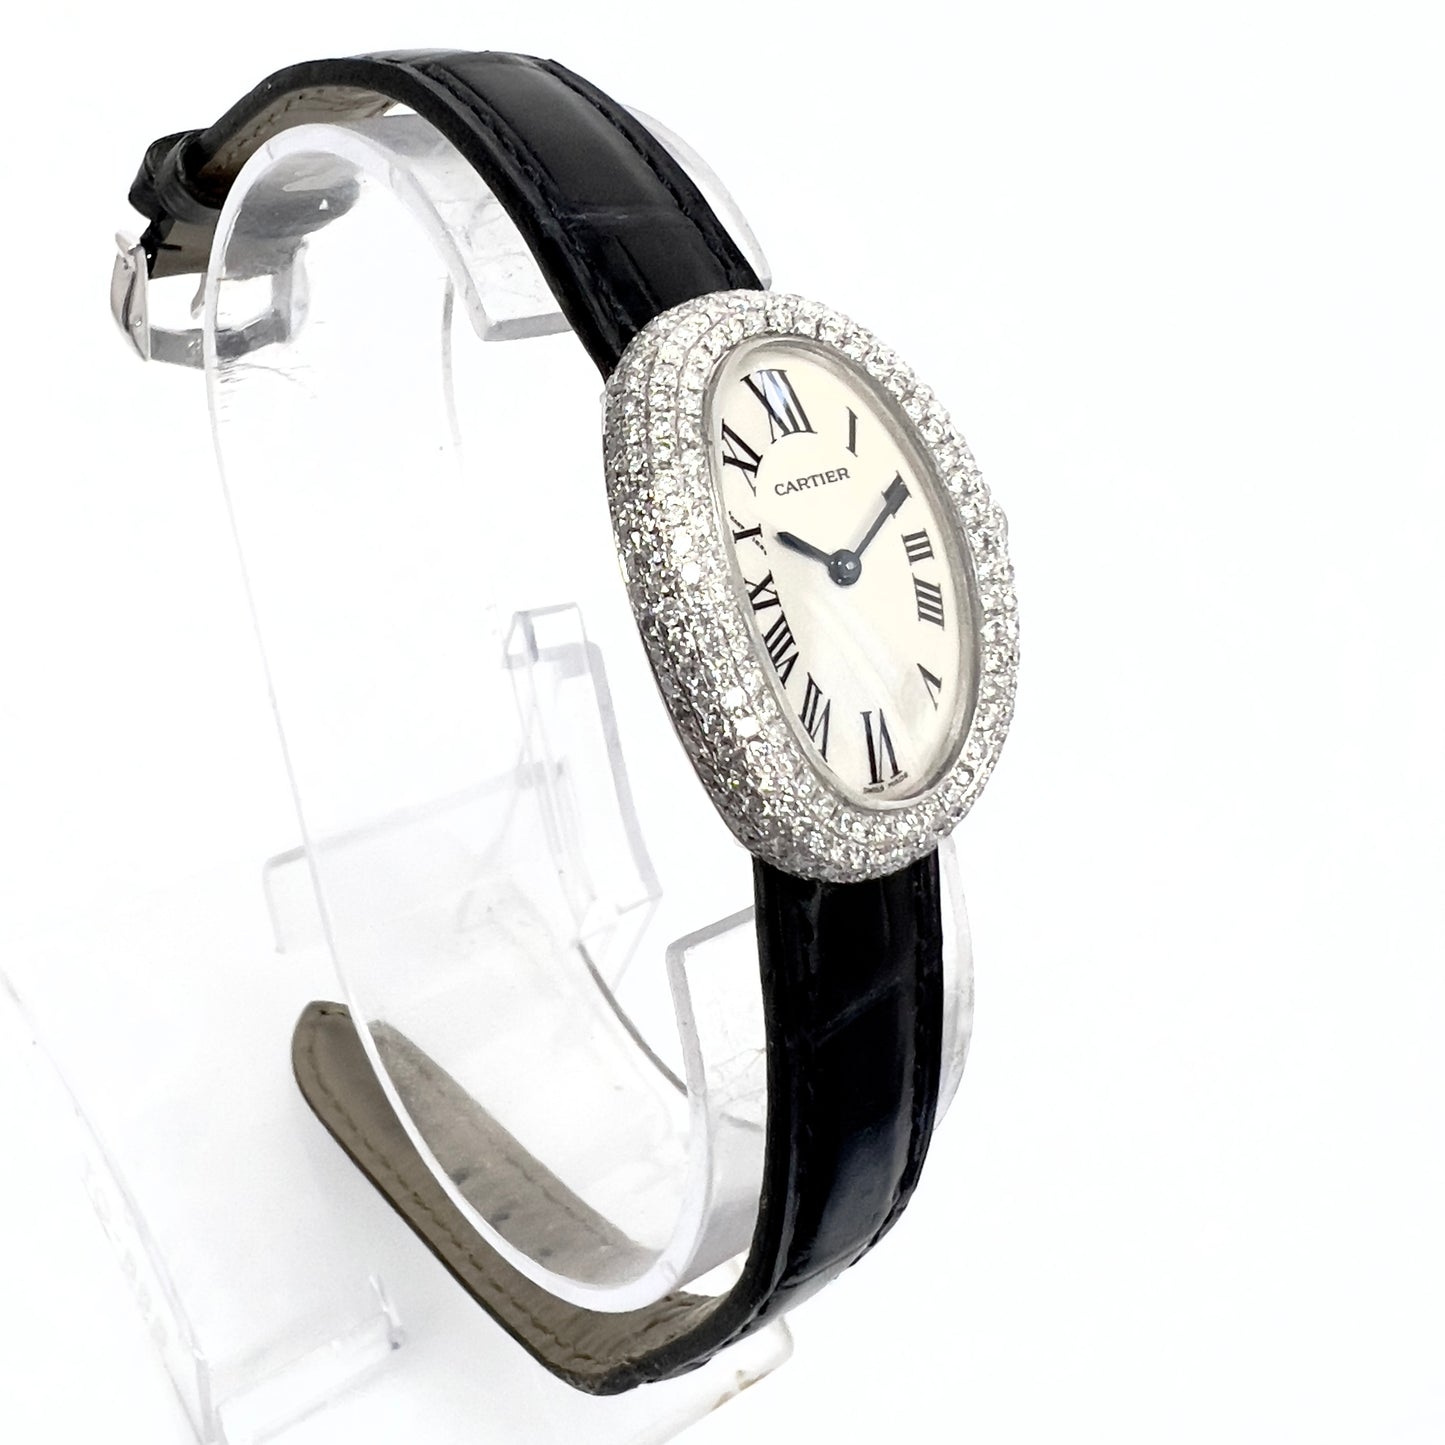 CARTIER BAIGNOIRE 18K White Gold 23mm 2.02TCW Diamond Watch